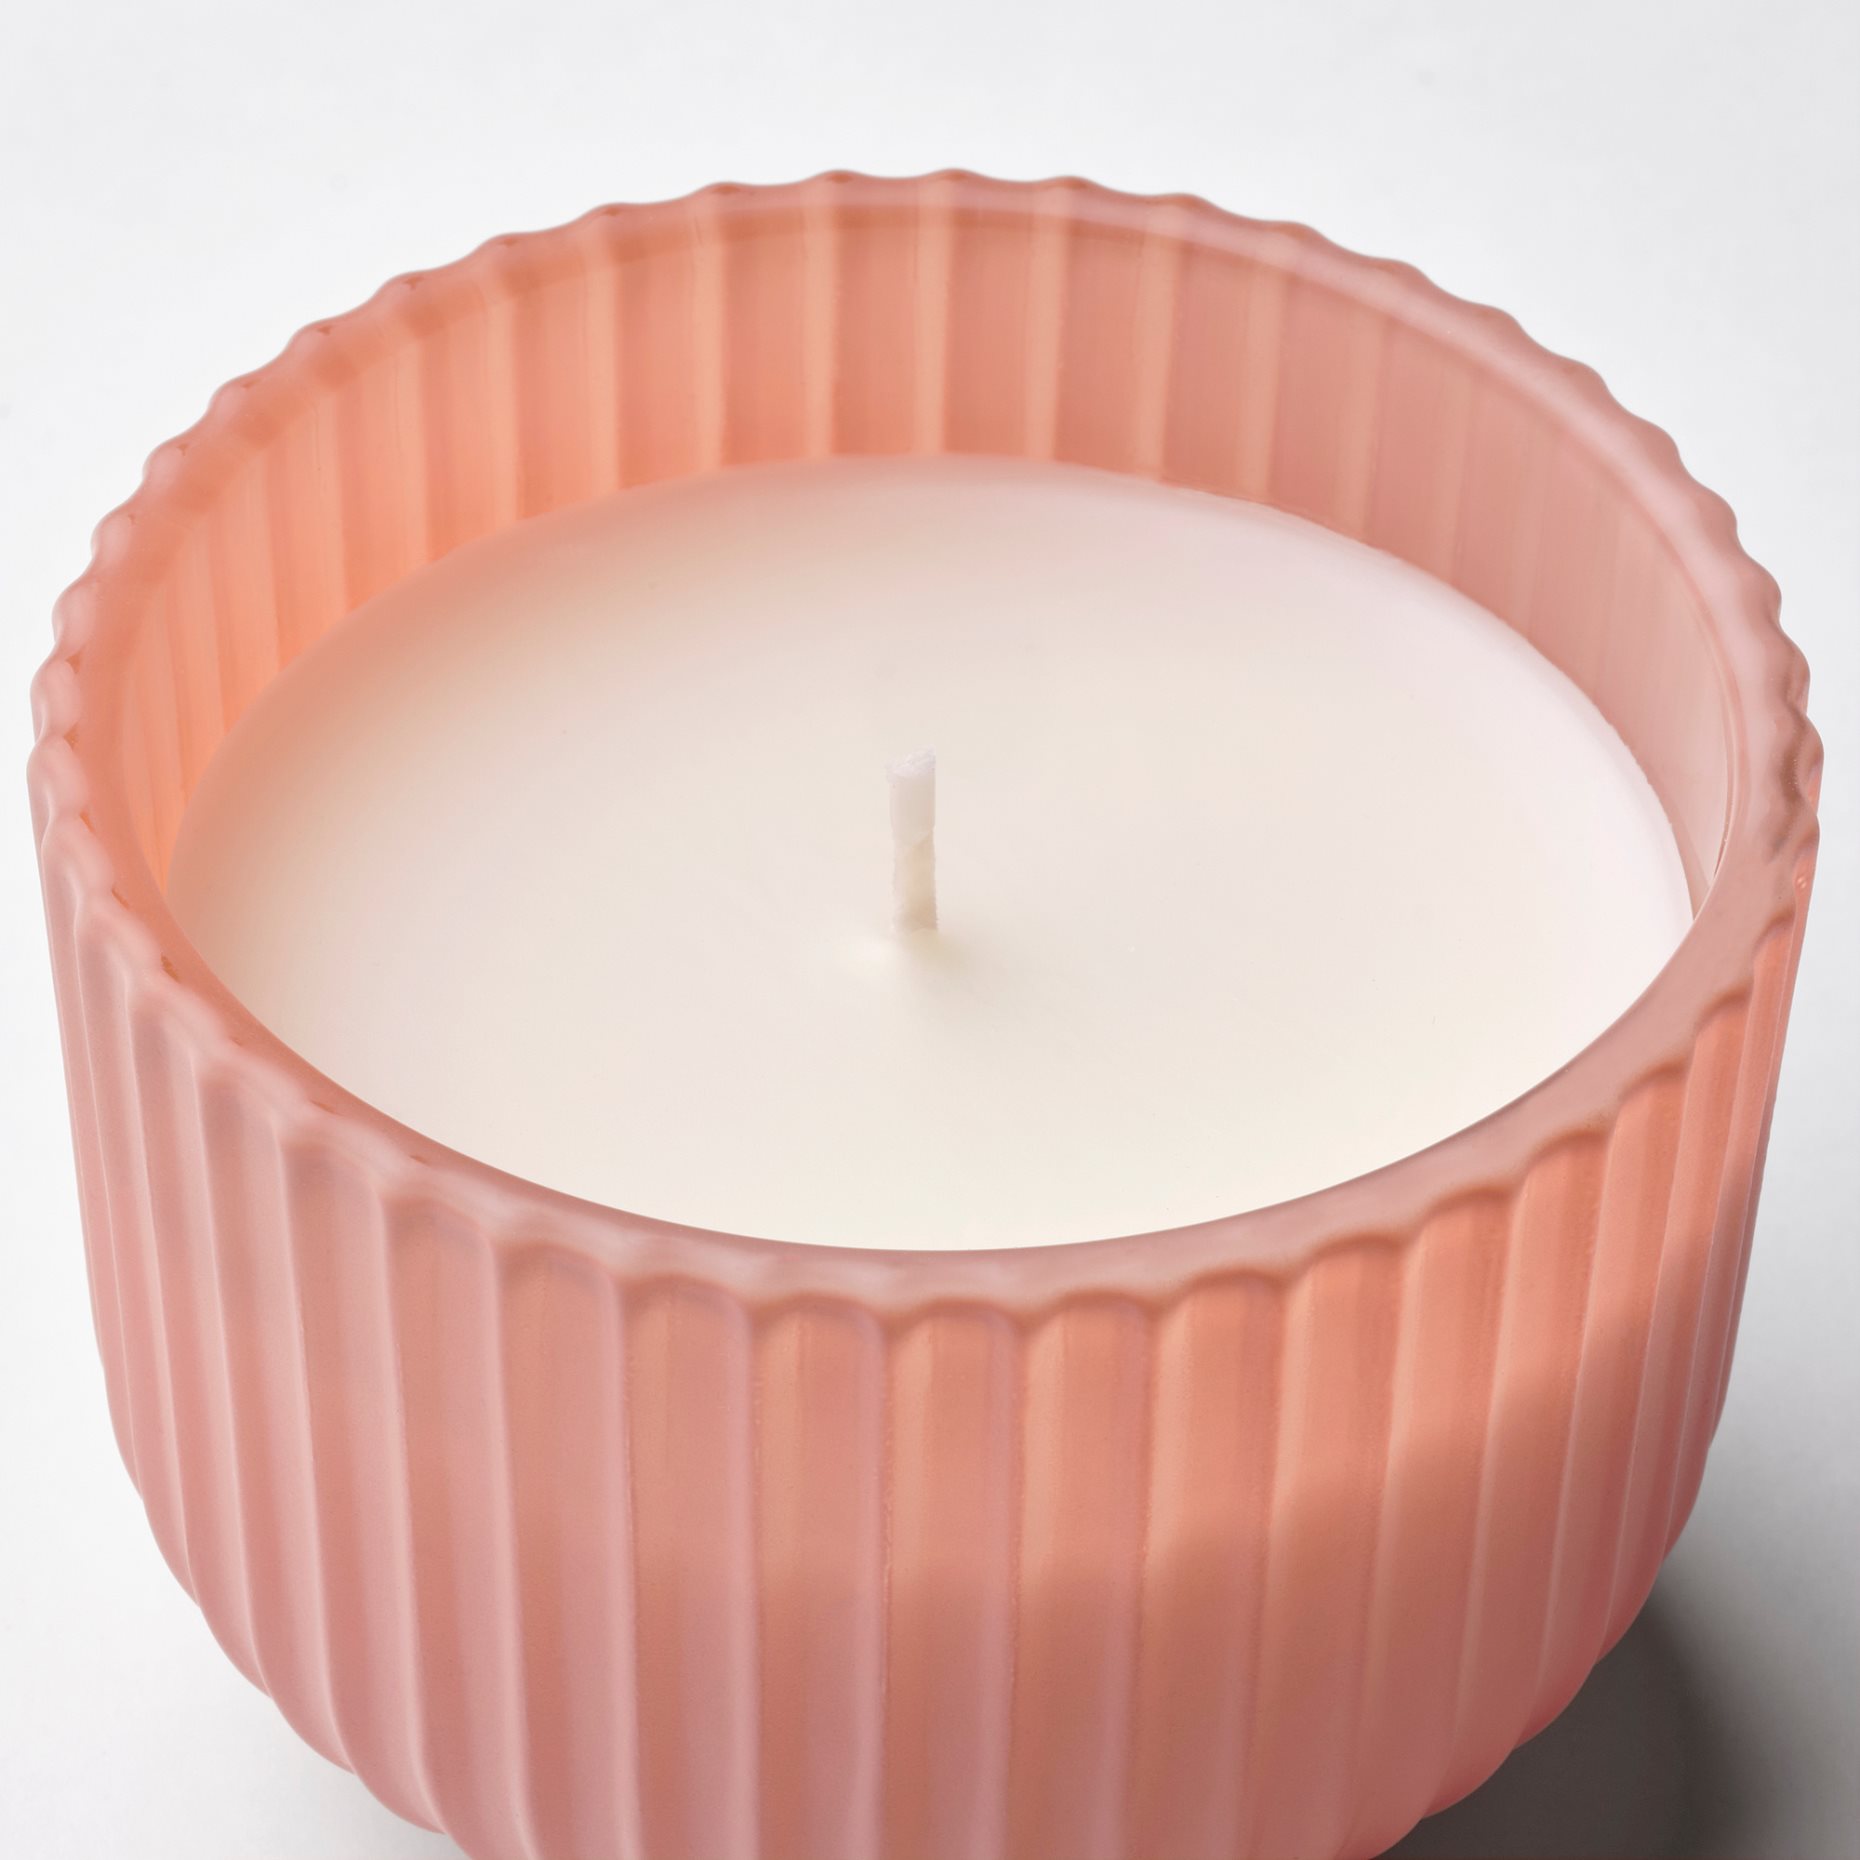 SOCKERLÖNN, scented candle in glass/Peach & blossom, 20 hr, 905.381.57